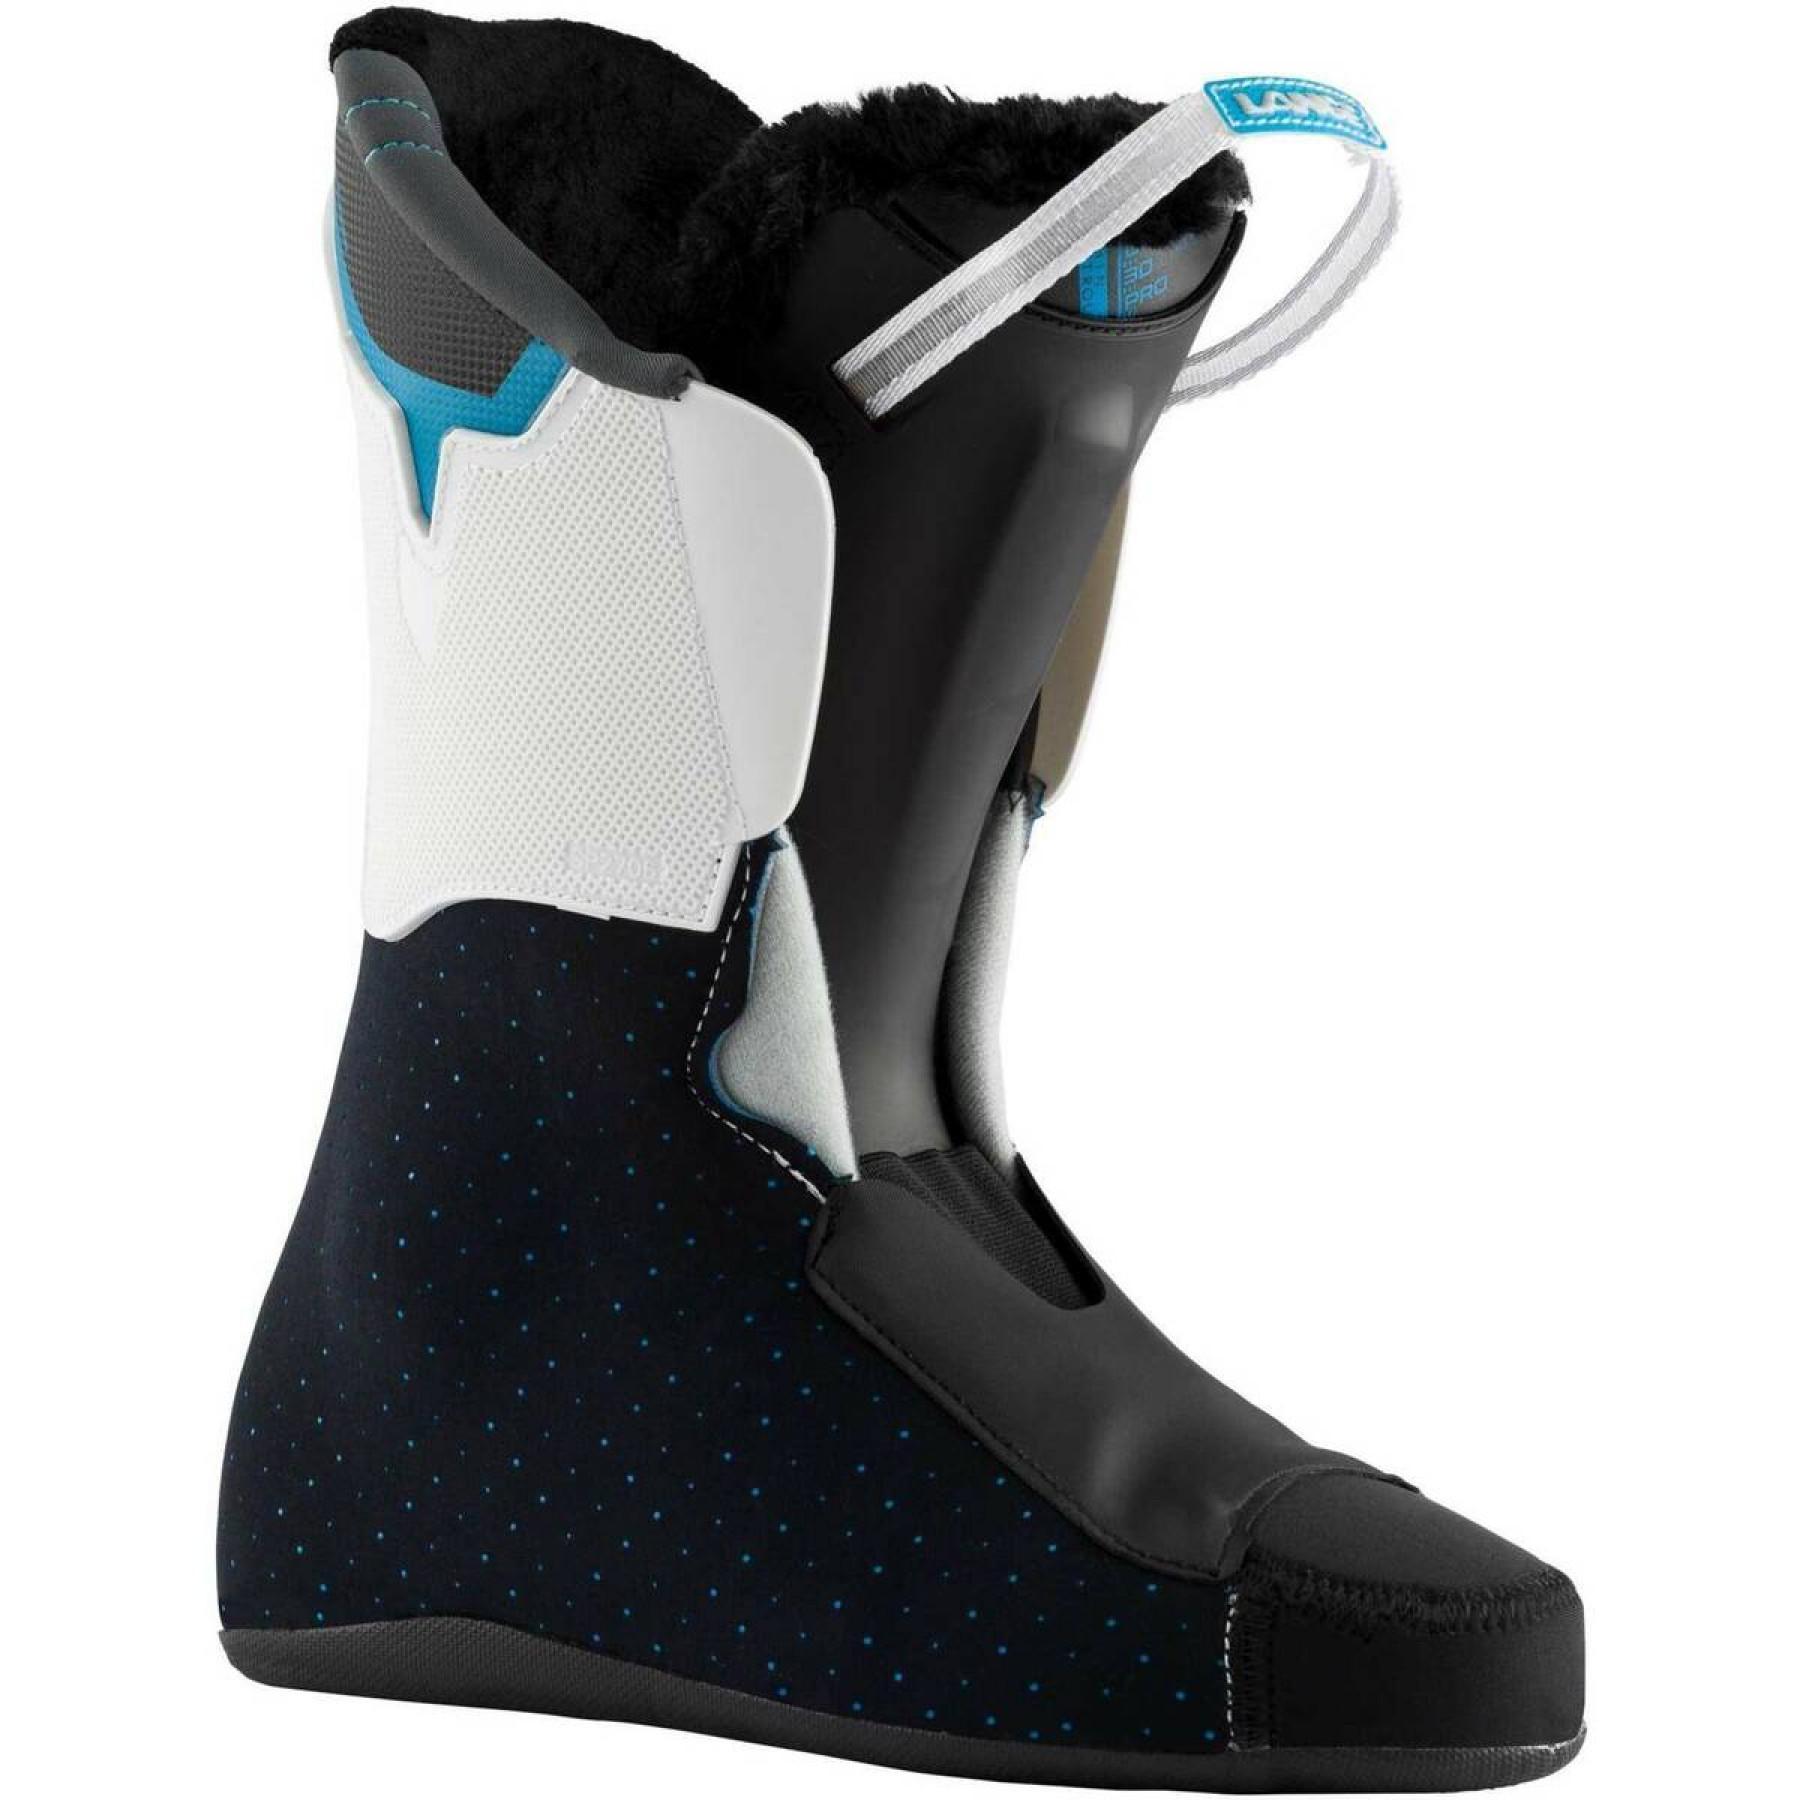 Women's ski boots Lange rx 110